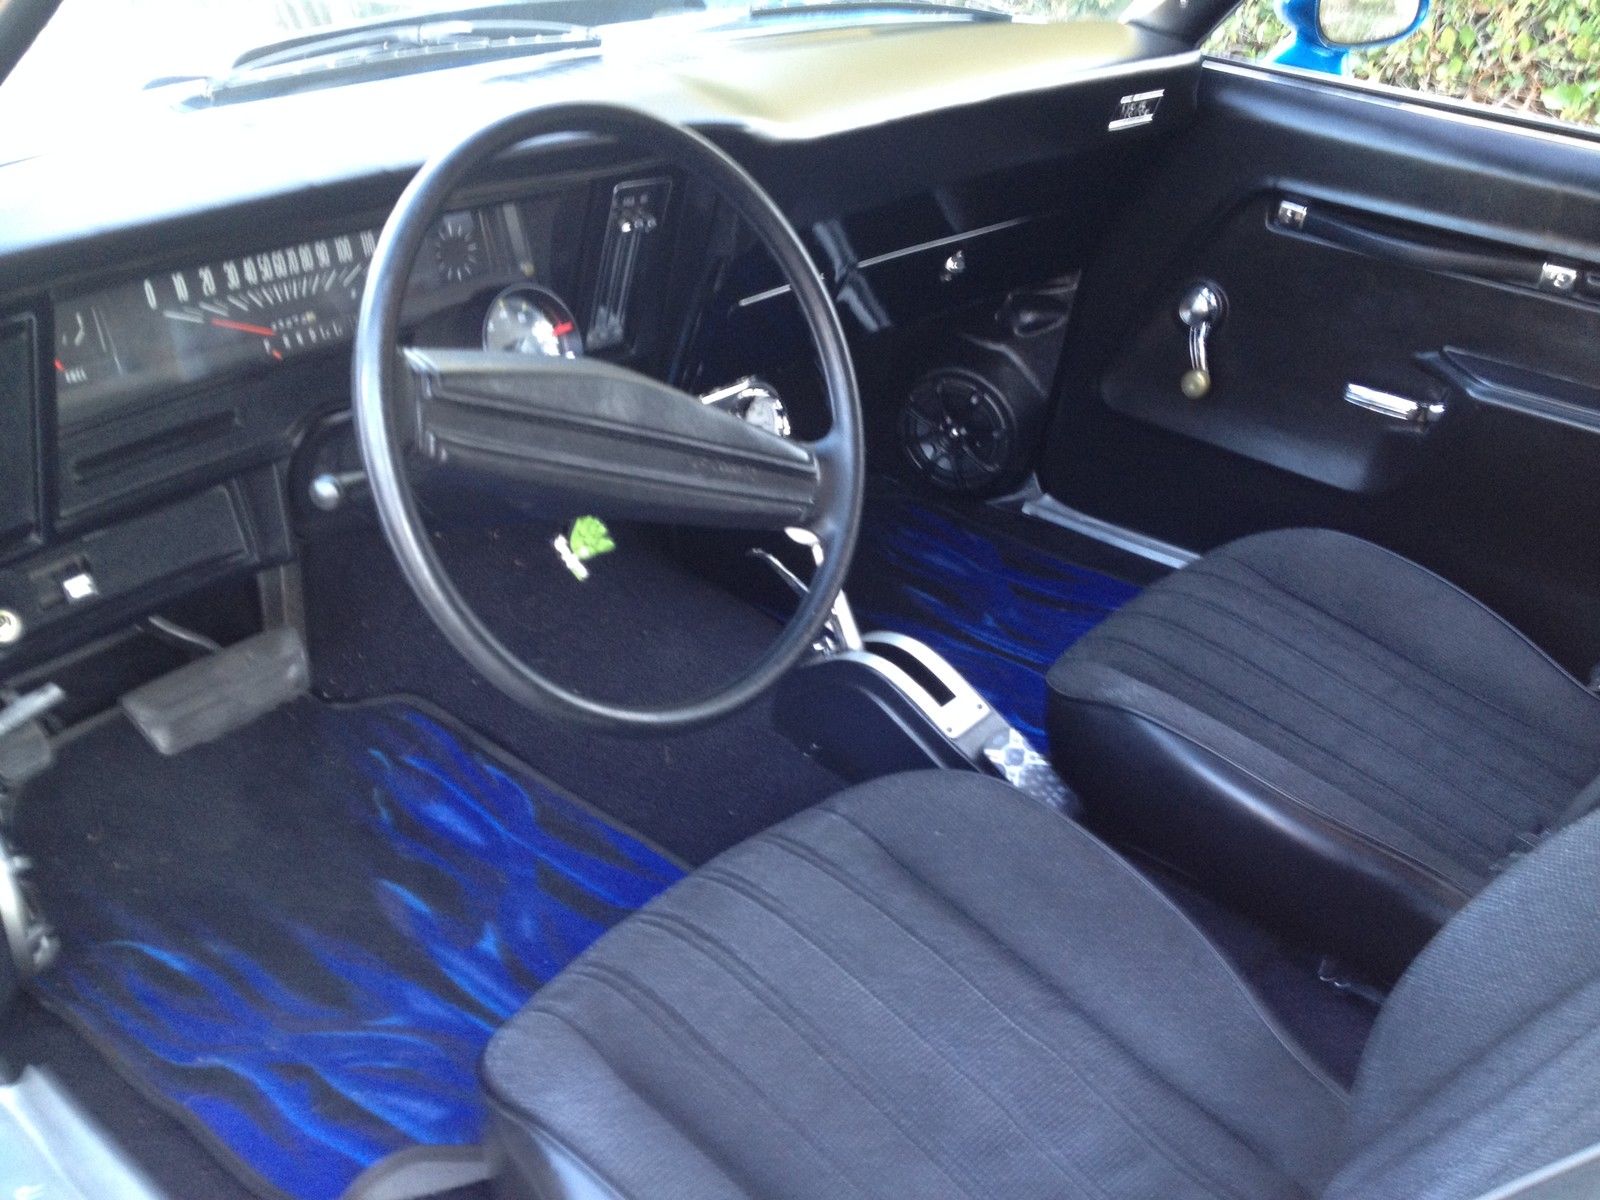 1973 Chevy Nova Classic Car Midnight Blue Stripes